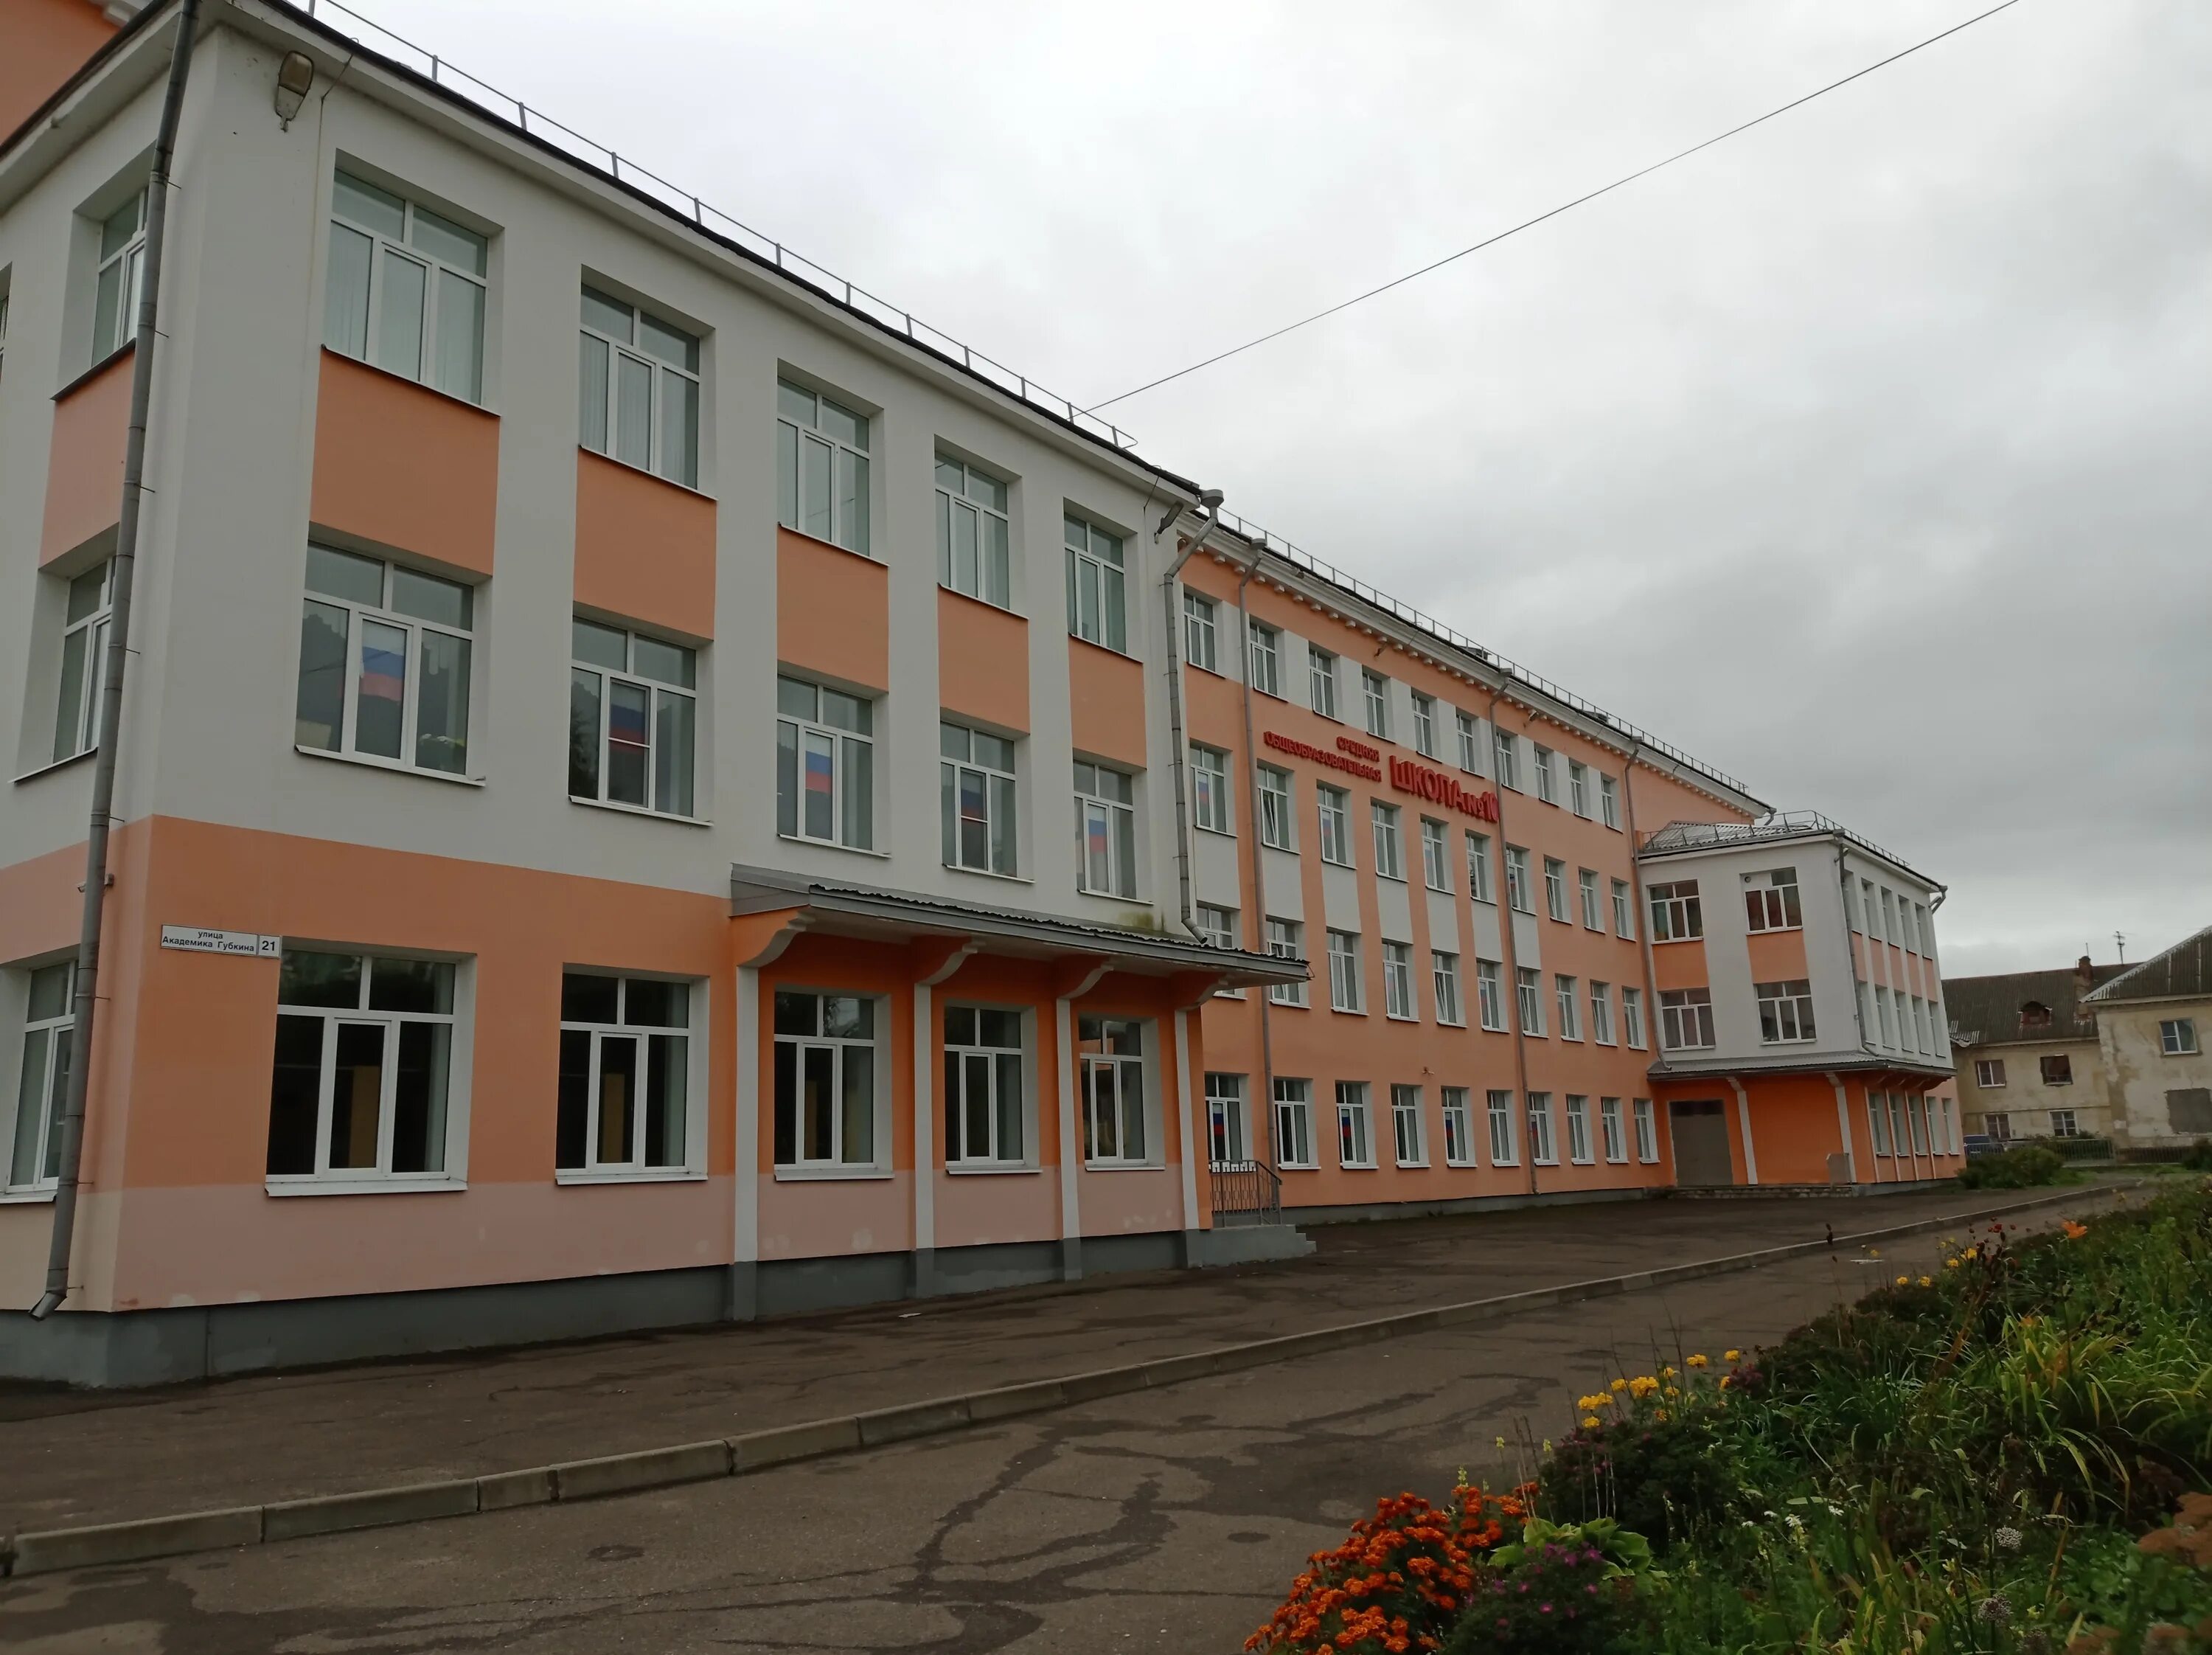 Школа 10 в руб. Школа №10 Рыбинск. Школа номер 10 Рыбинск. Школа 33 Рыбинск. 21 Школа Рыбинск.